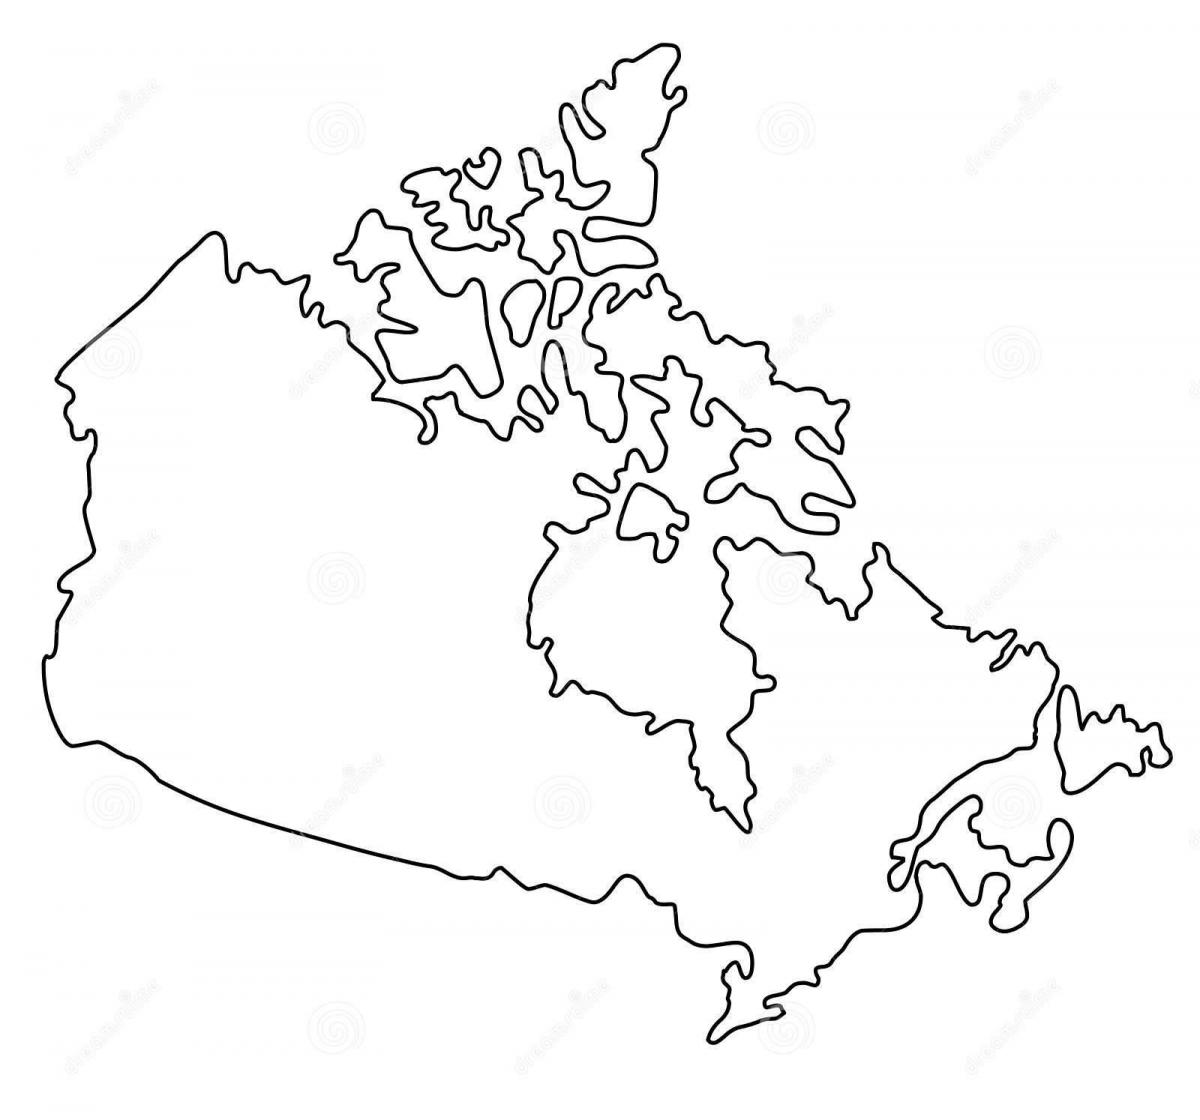 Canada contours map